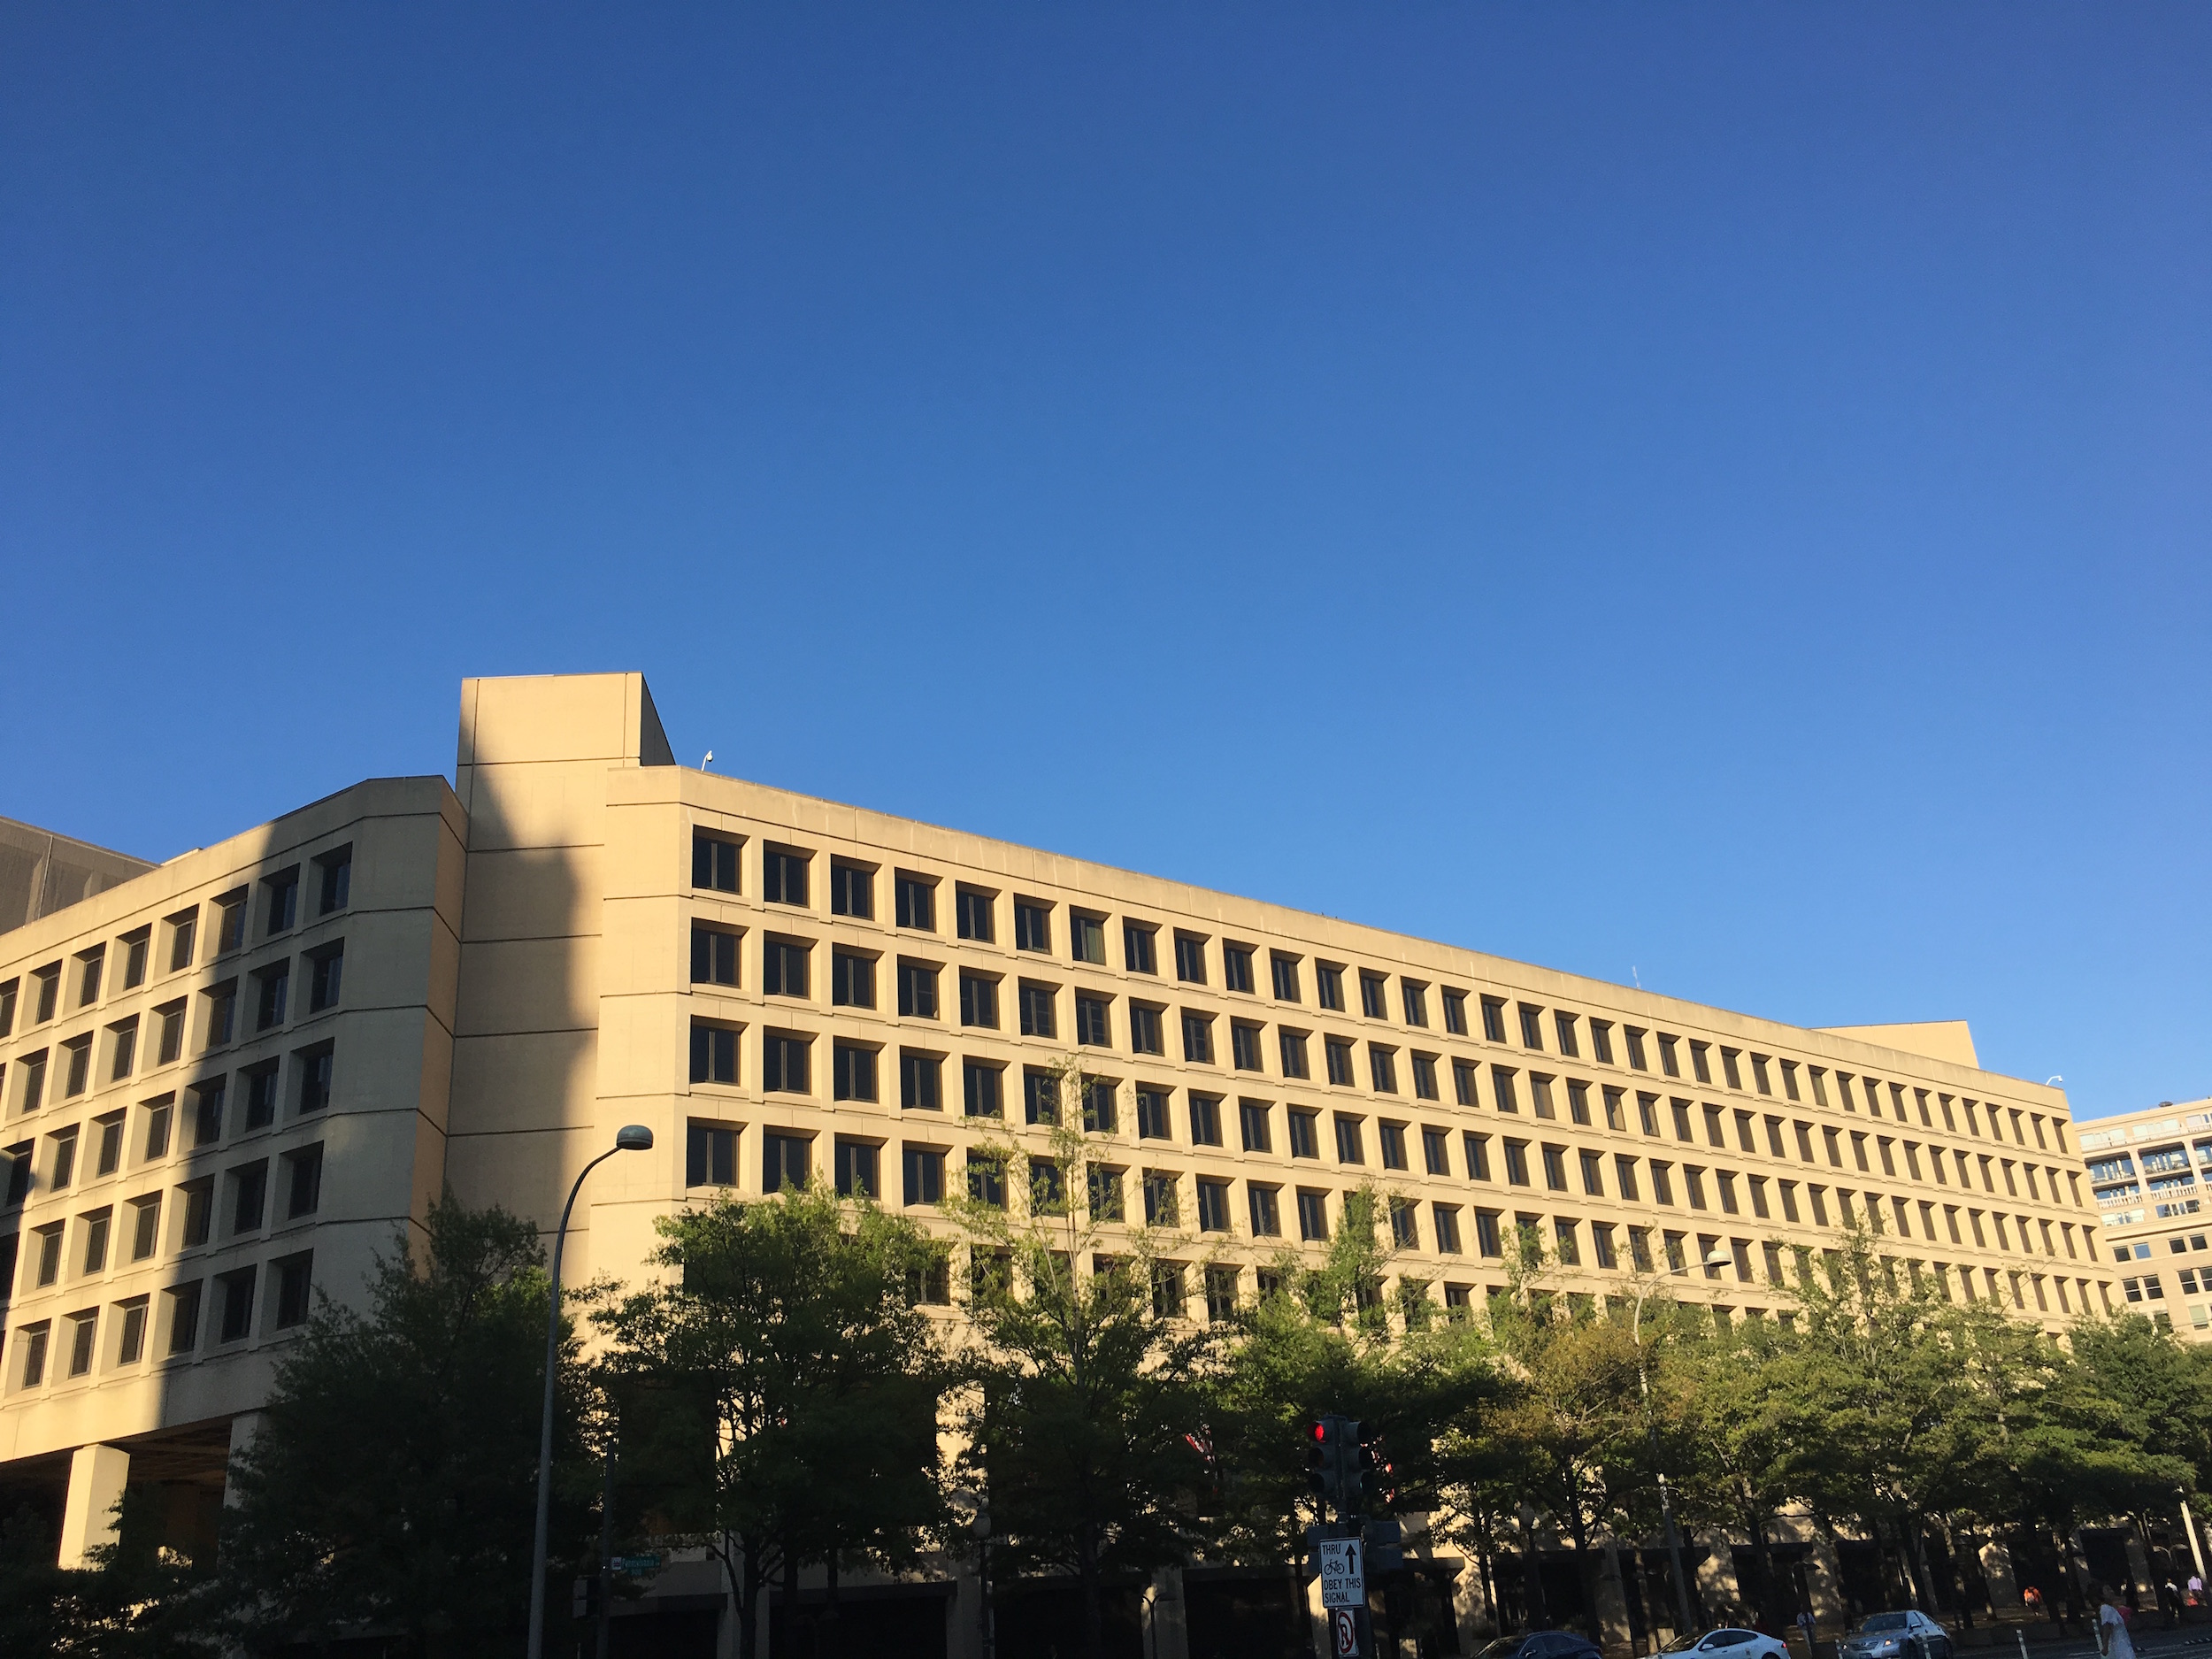 The FBI-building